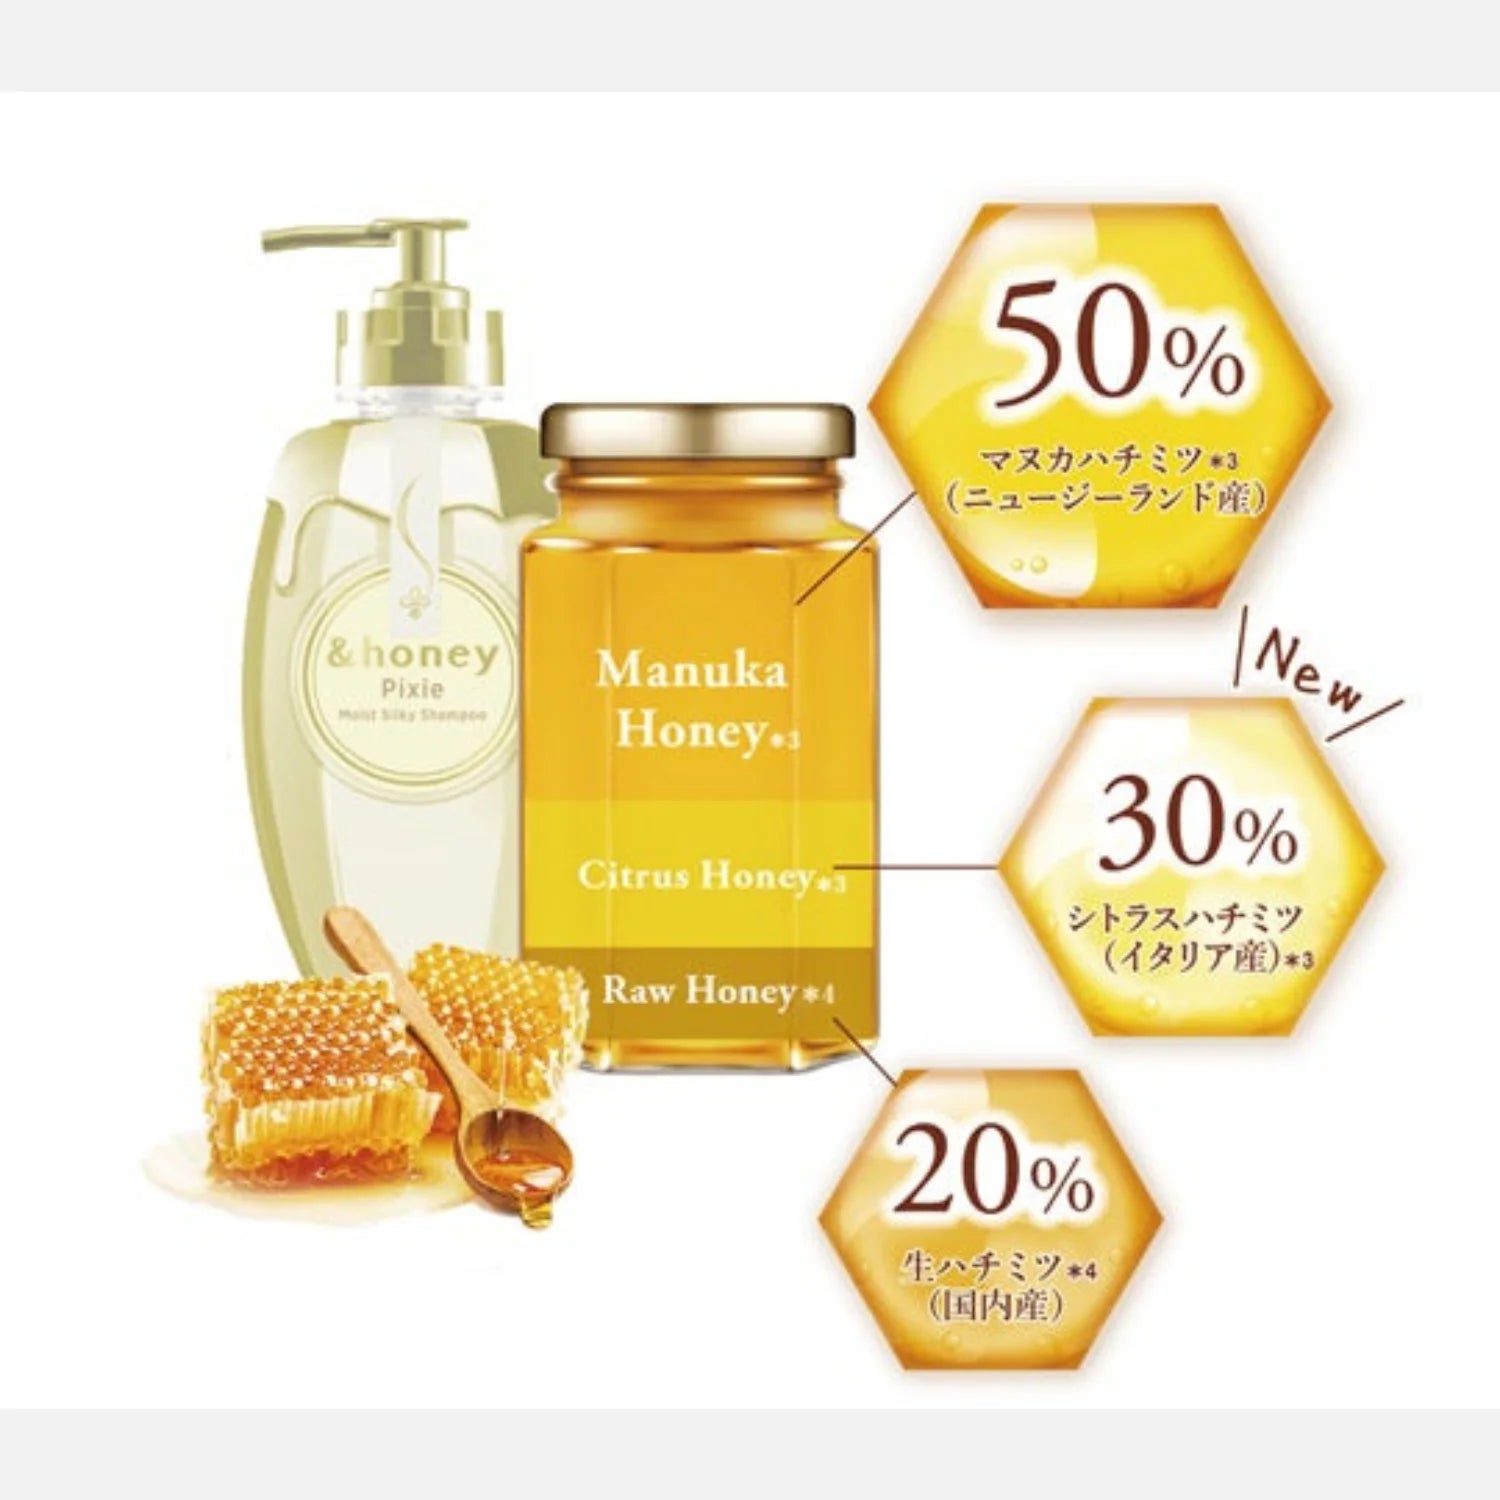 & Honey Pixie Moist Silky Shampoo & Treatment Set 440ml Each - Buy Me Japan